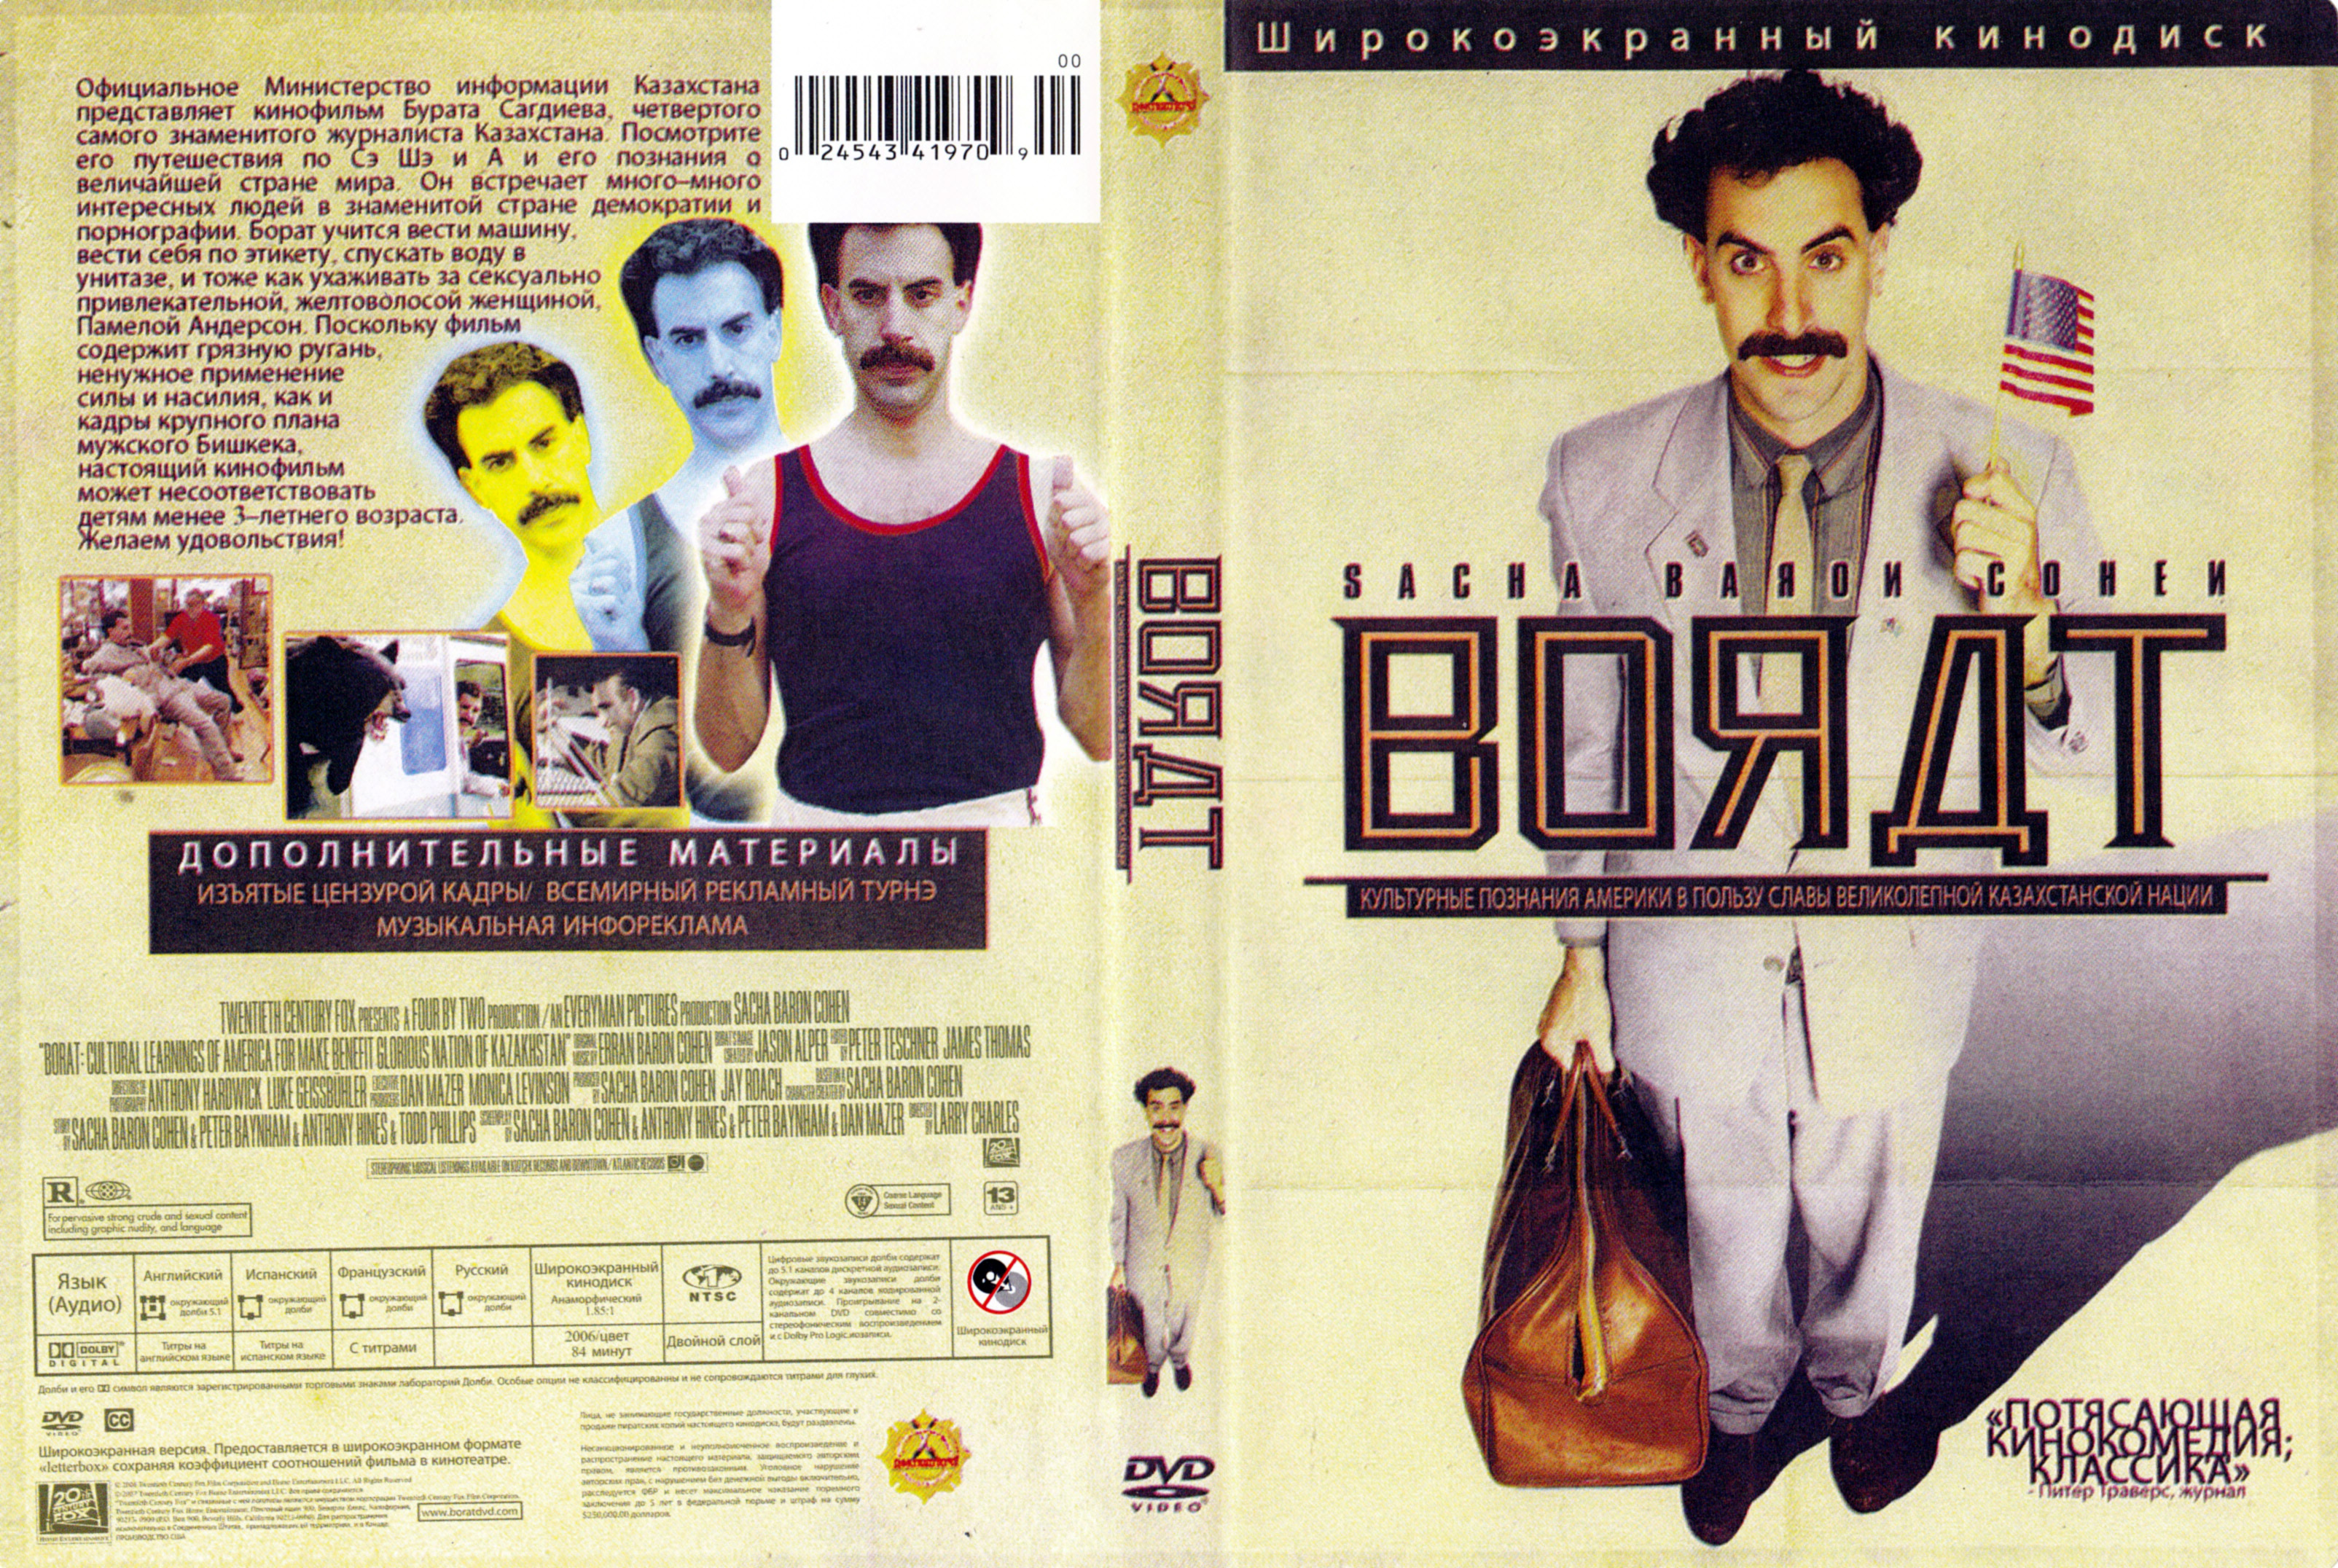 Jaquette DVD Borat (Canadienne)